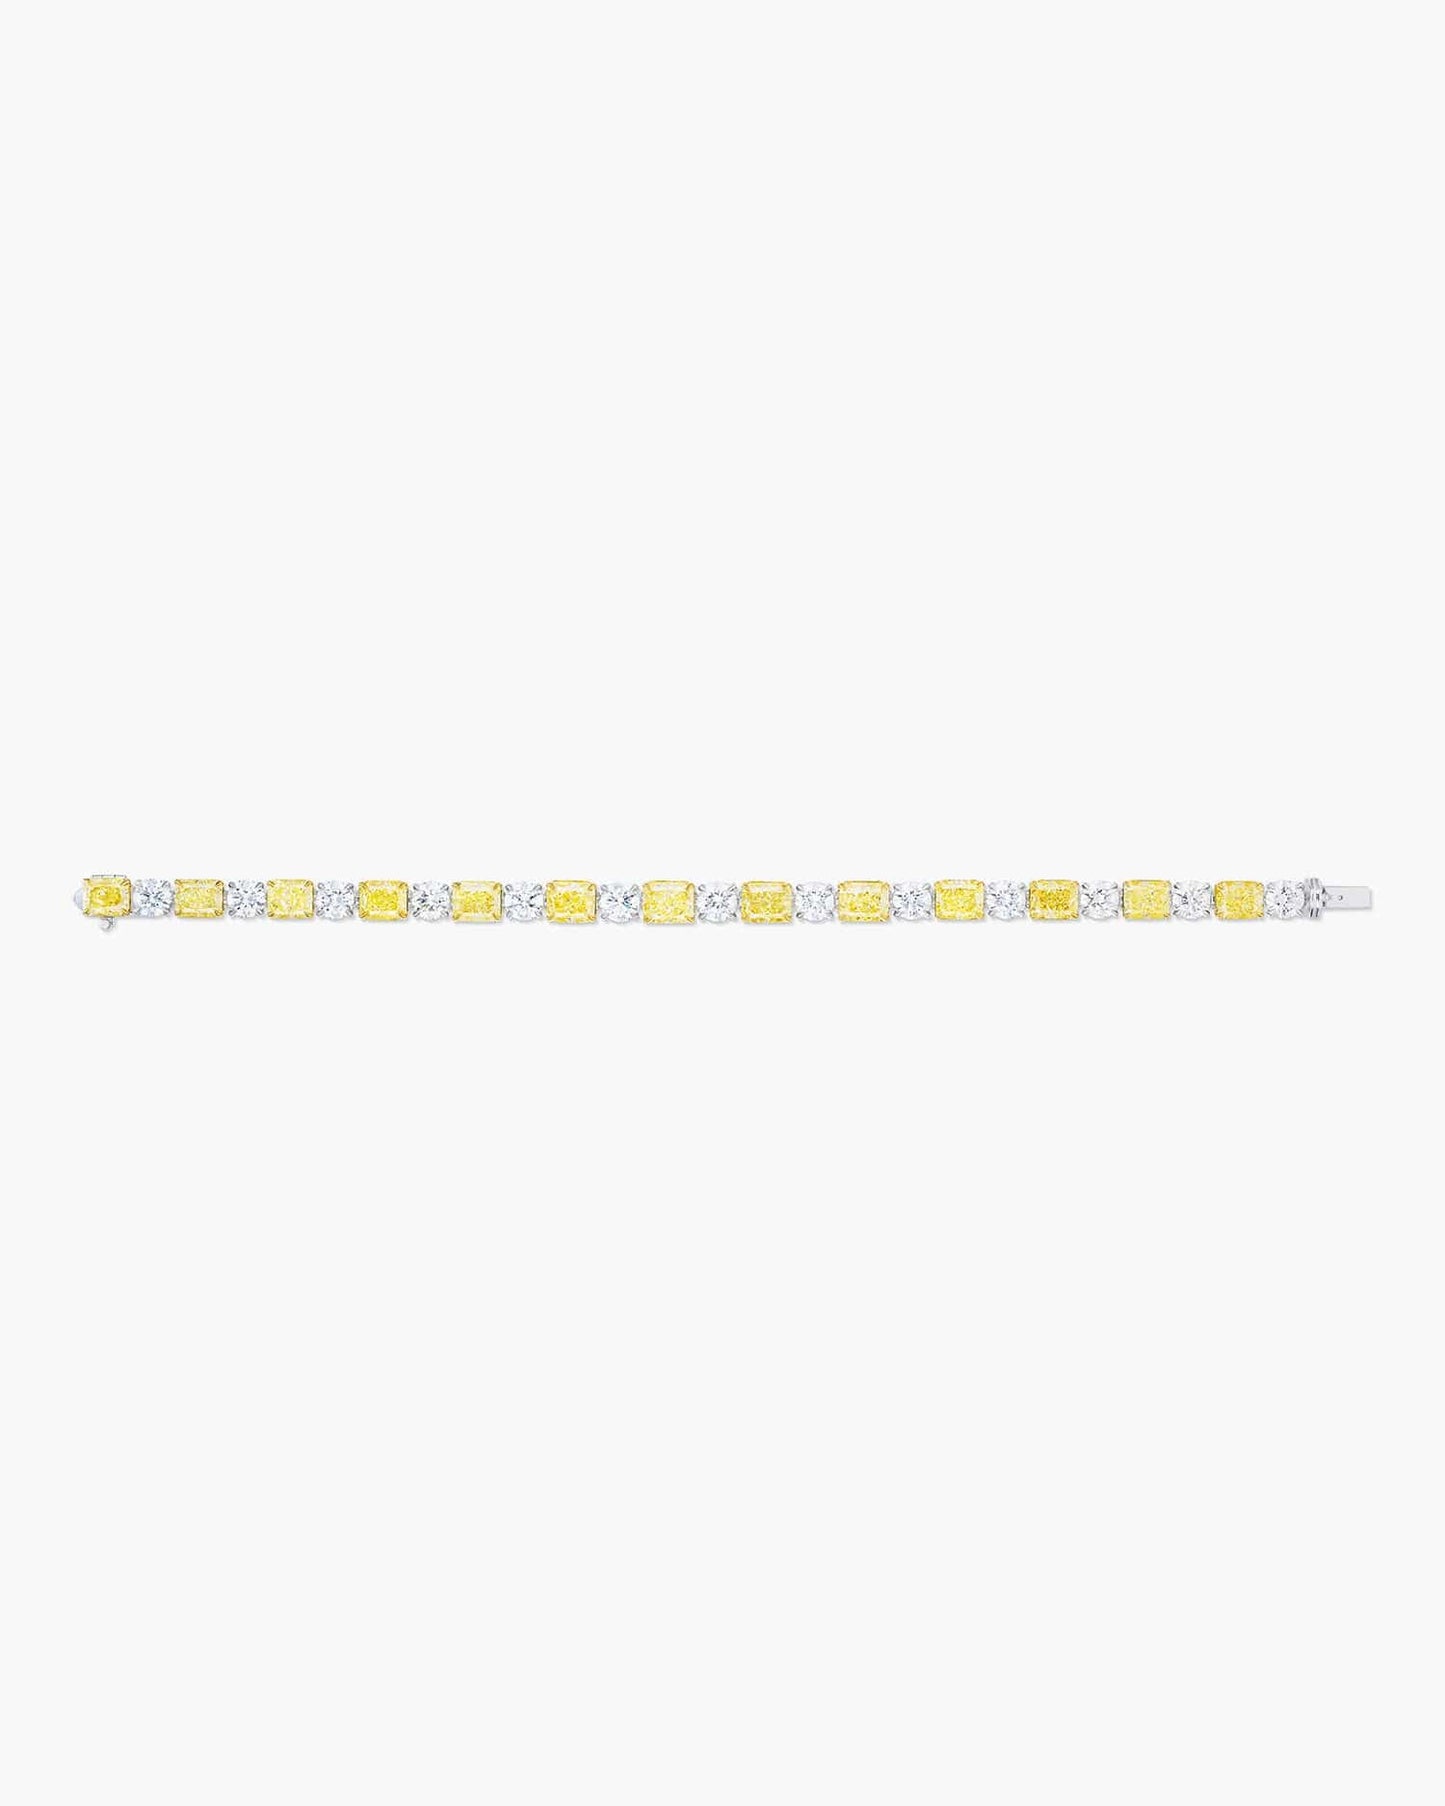 Radiant Cut Yellow and White Diamond Bracelet (1.00 carat)